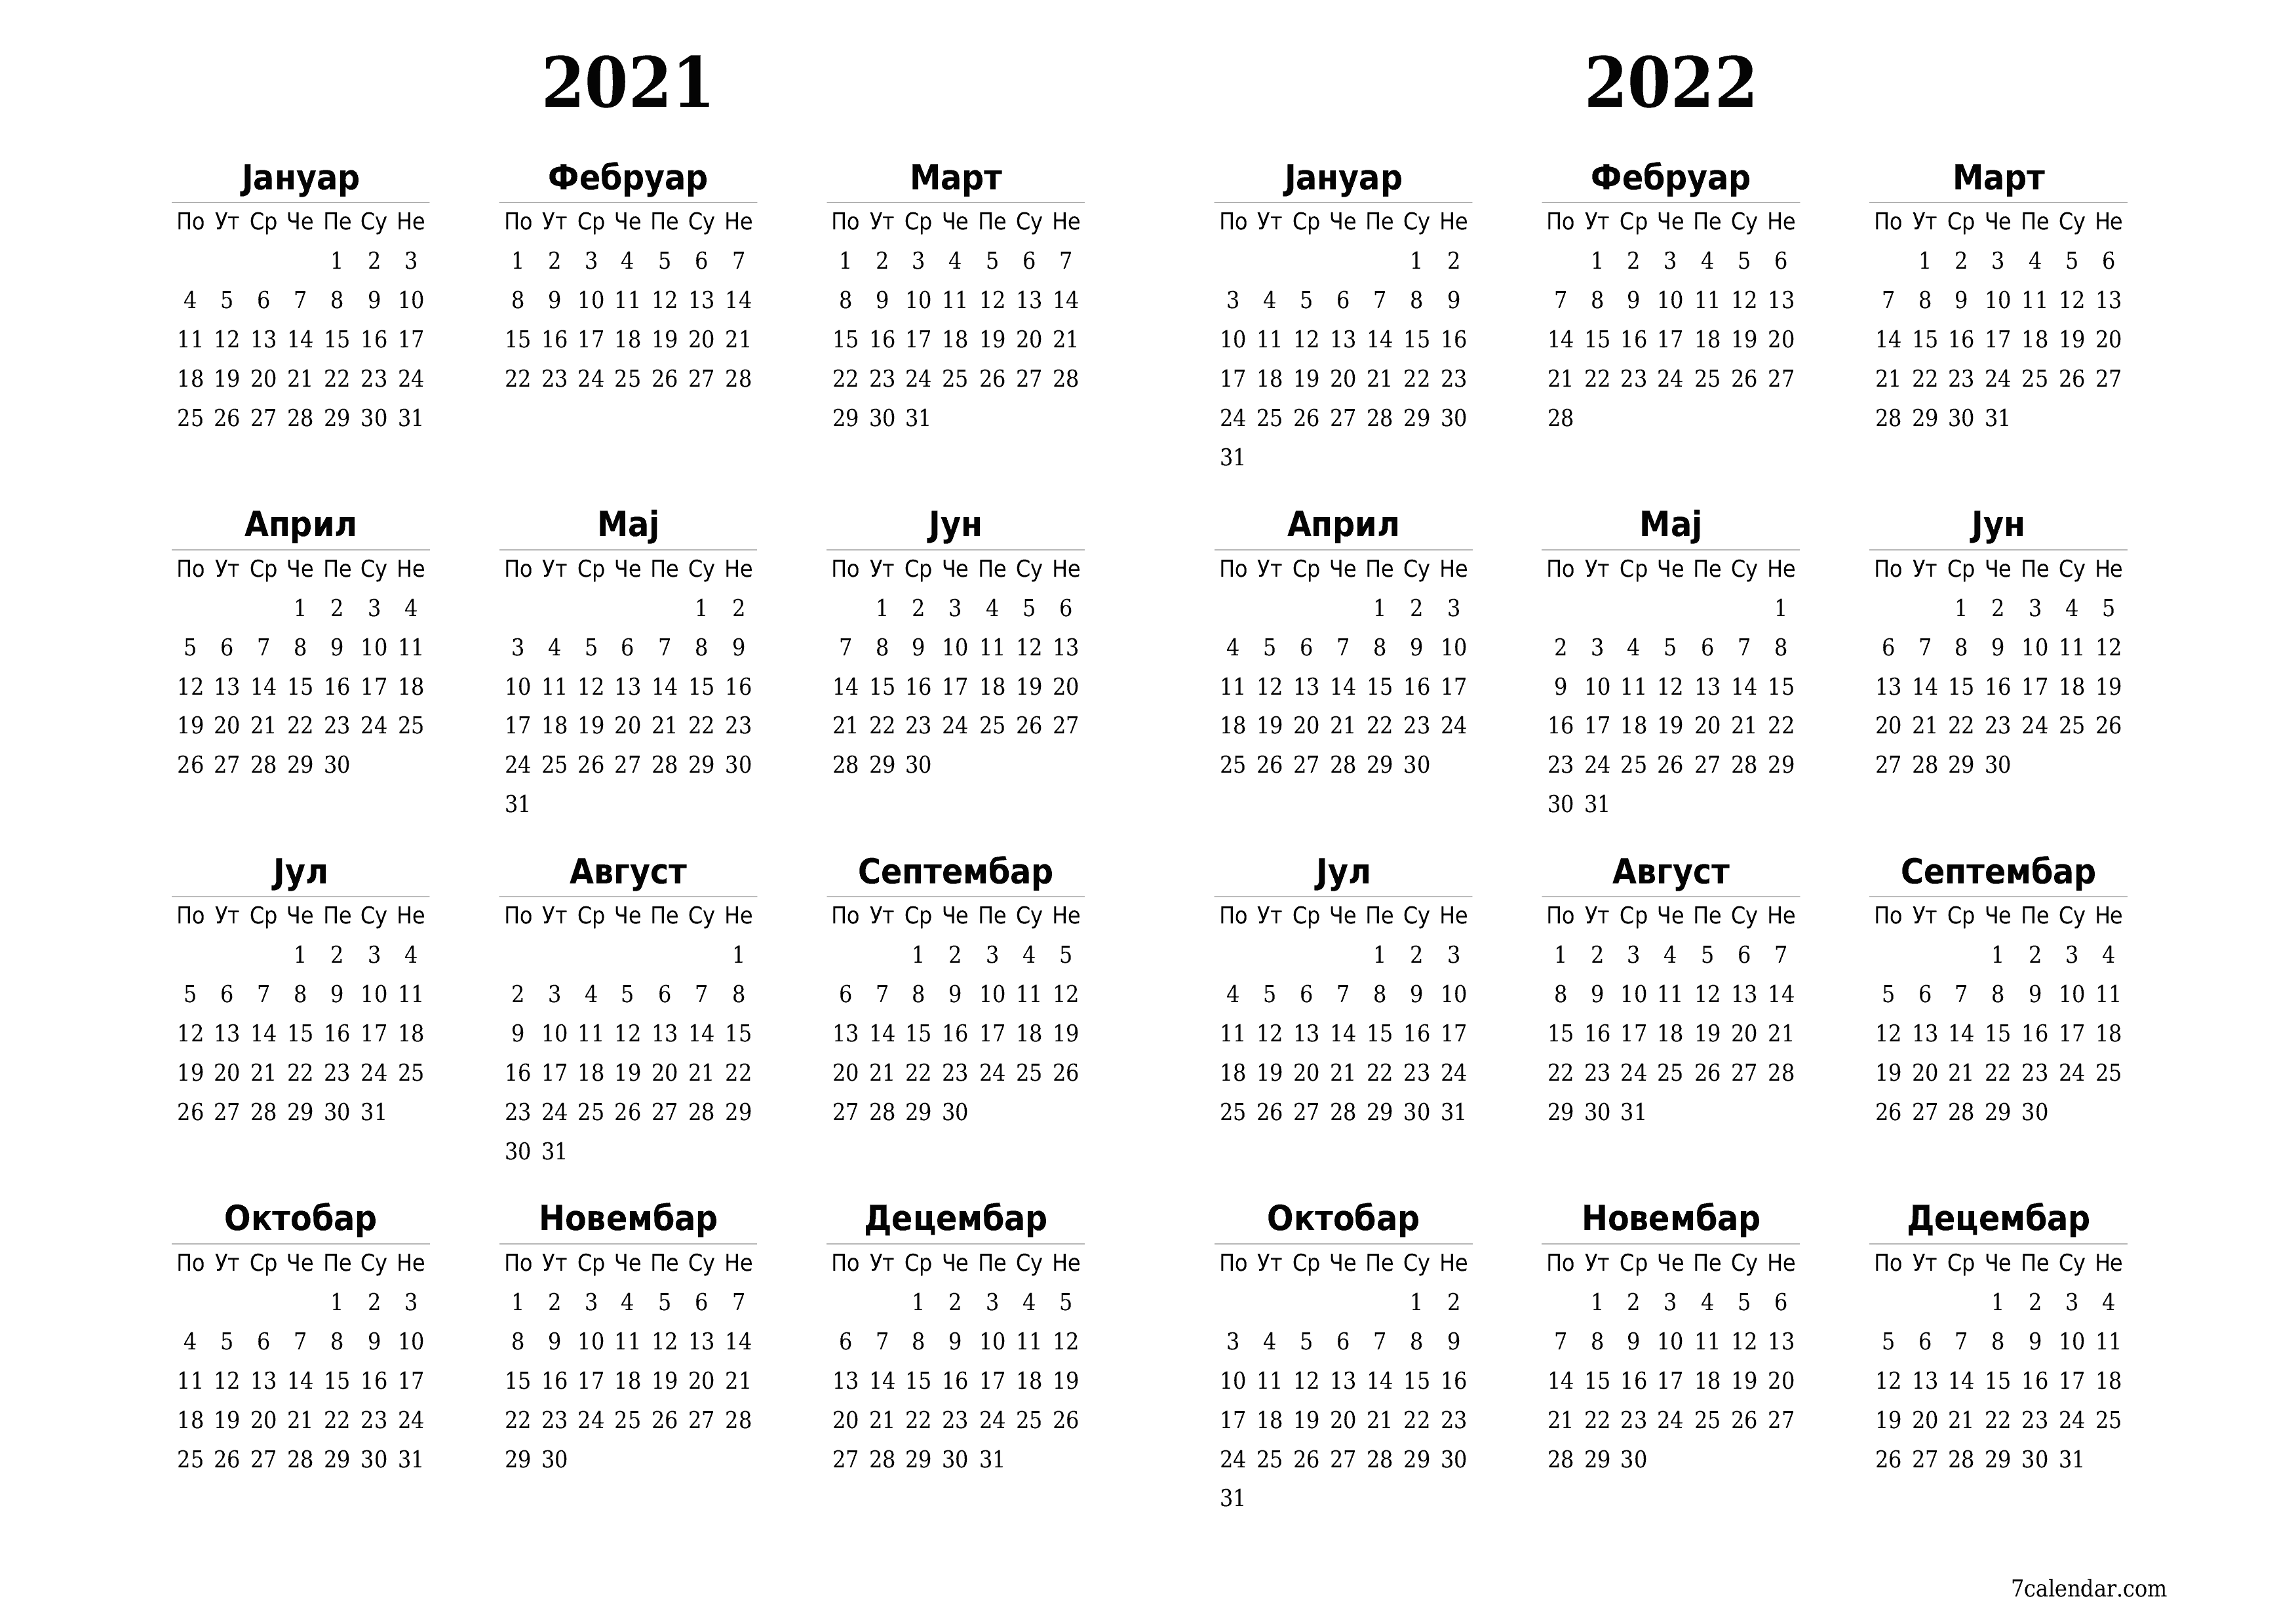  за штампање зидни шаблон а бесплатни хоризонталниј Годишње календар Фебруар (Феб) 2021